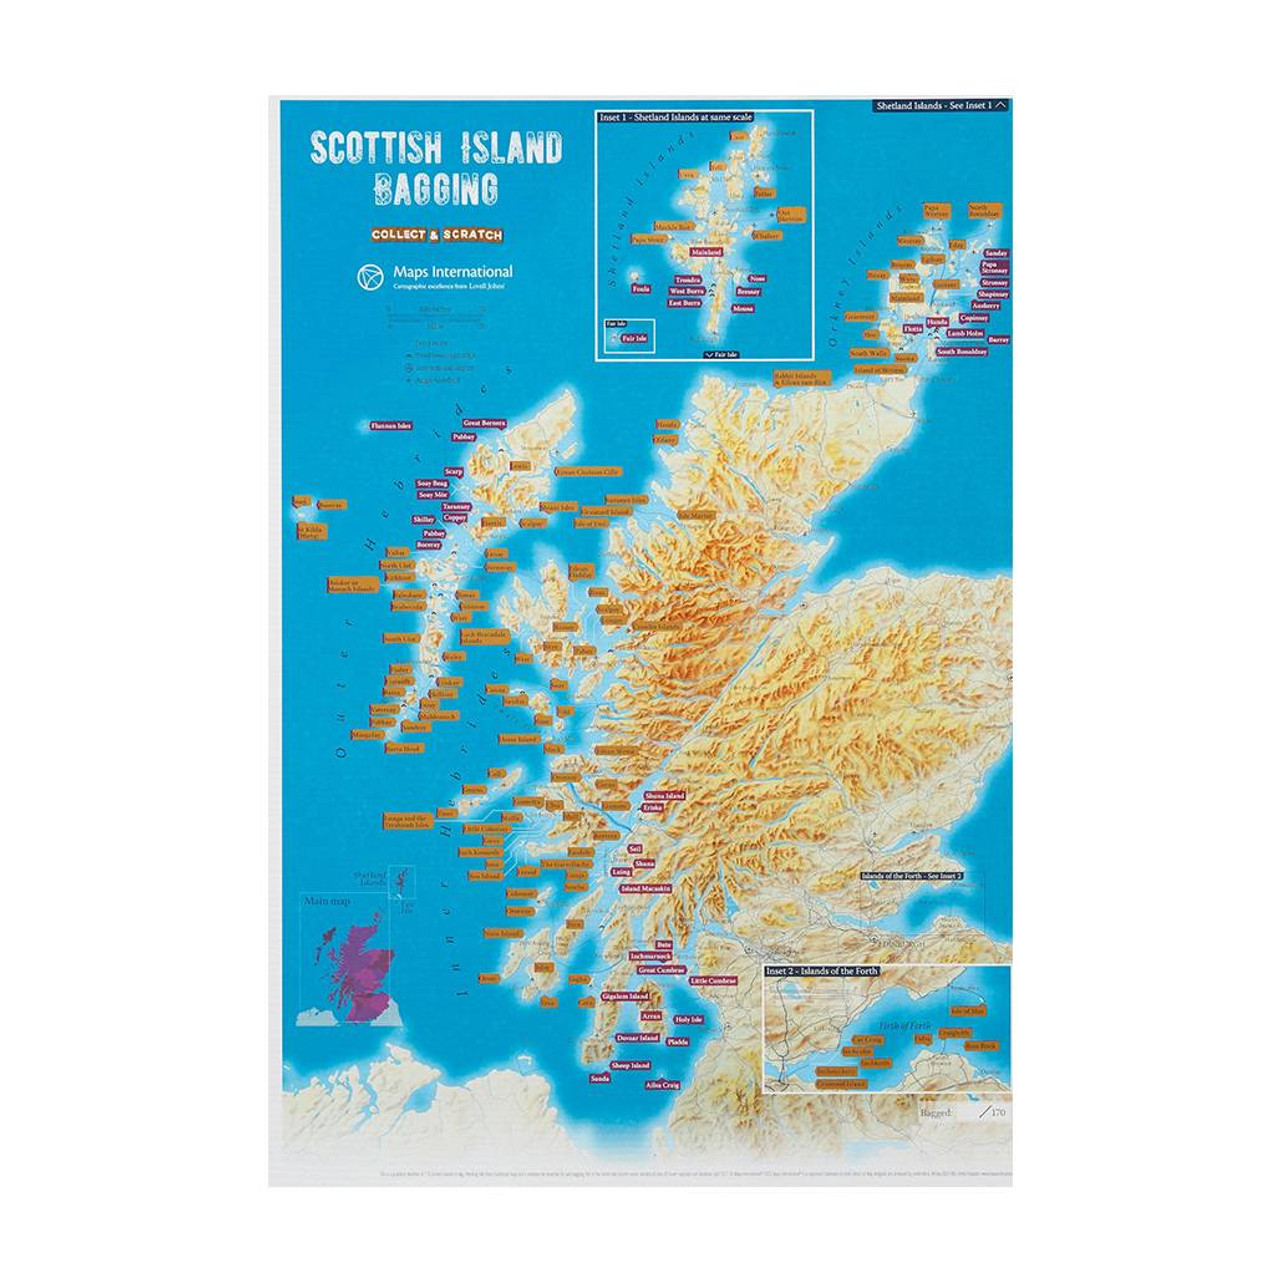 Scottish Island Bagging CollectandScratch Off Map